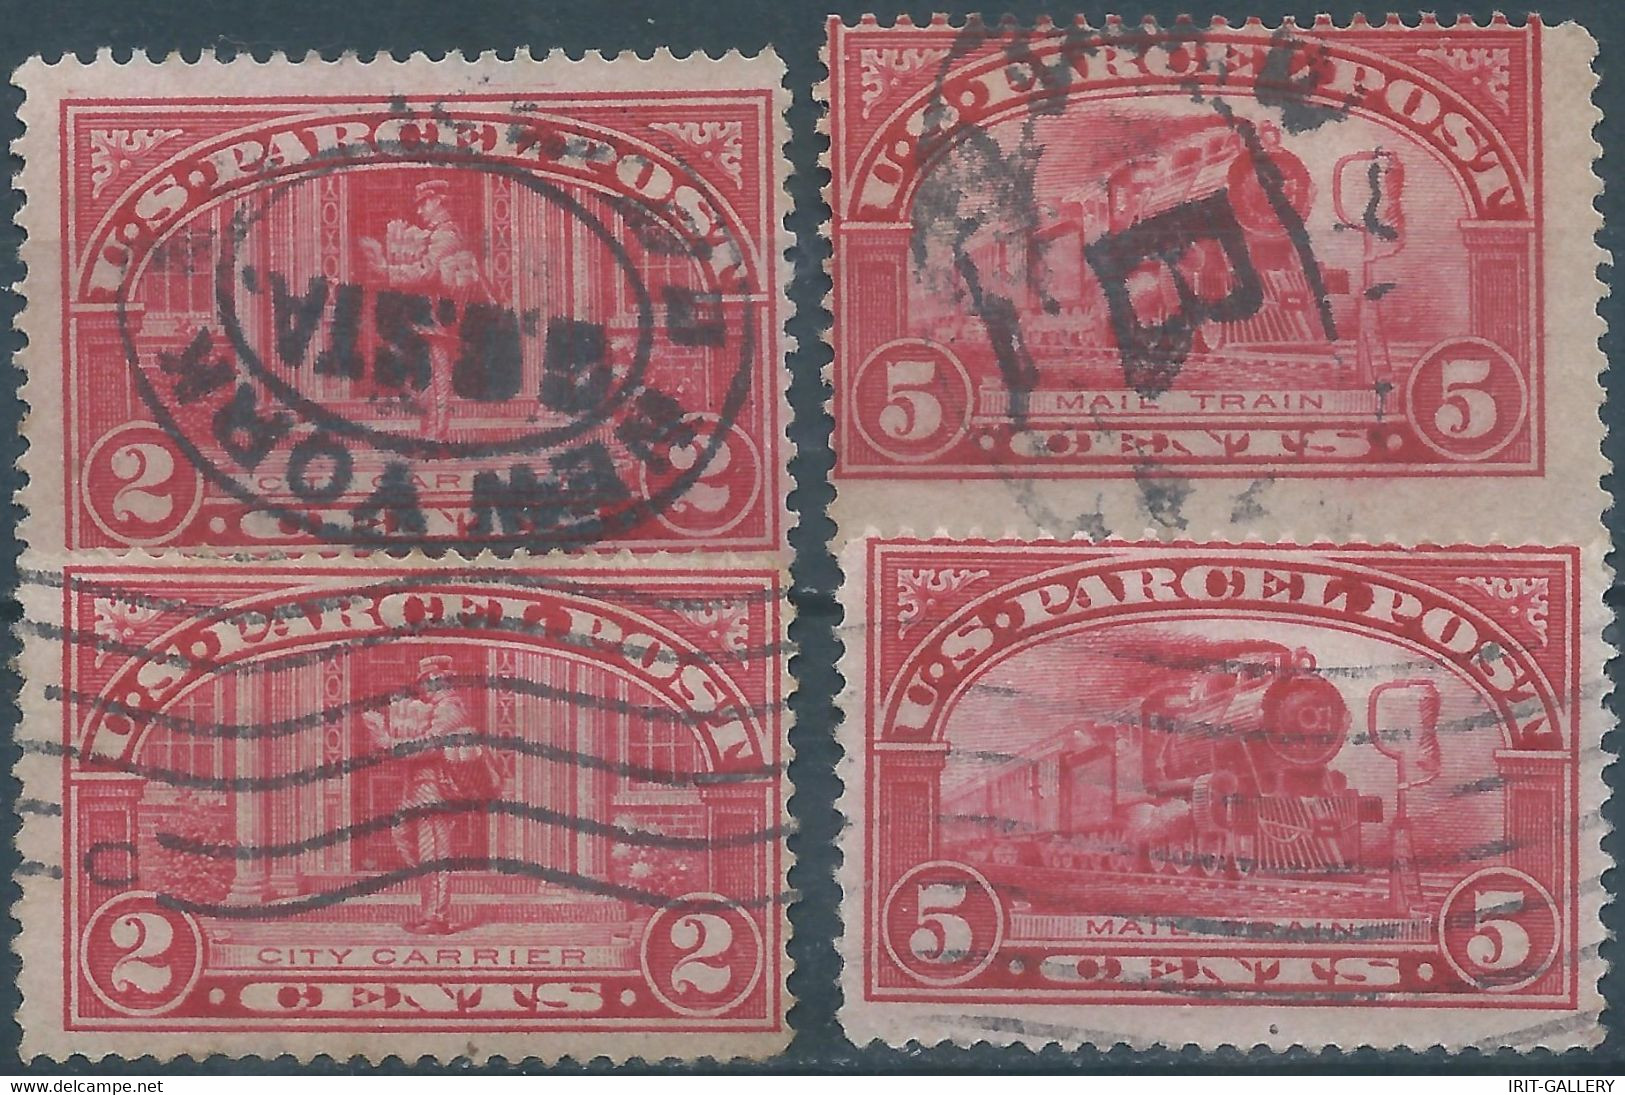 340-United States,U.S.A,Revenue Stamps PARCEL POST,2&5c,Used - Parcel Post & Special Handling